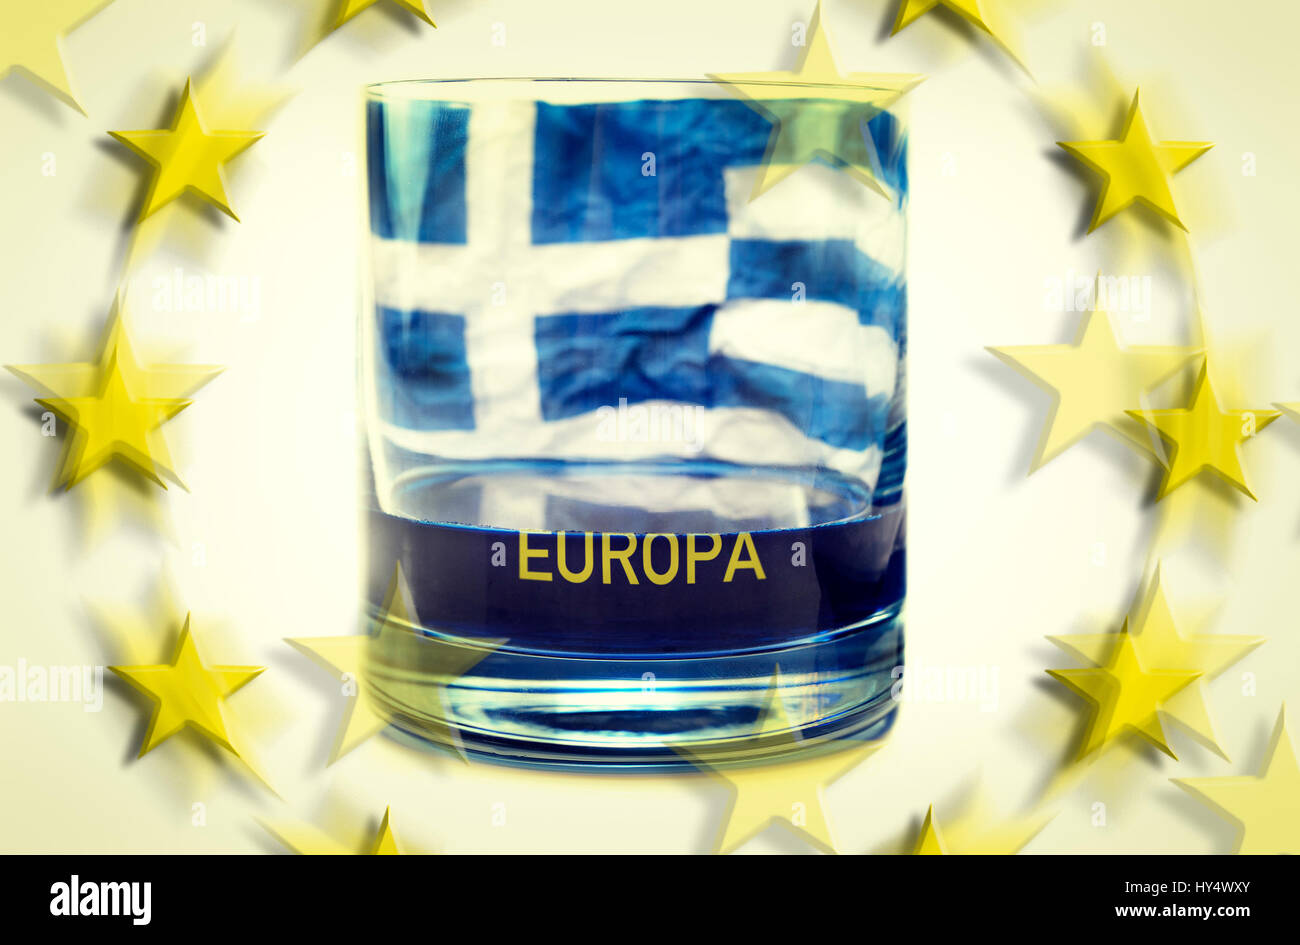 Bicchiere mezzo vuoto con bandiera greca, simbolico debito foto litigio, Halbleeres Glas mit griechischer Fahne, Symbolfoto Schuldenstreit Foto Stock